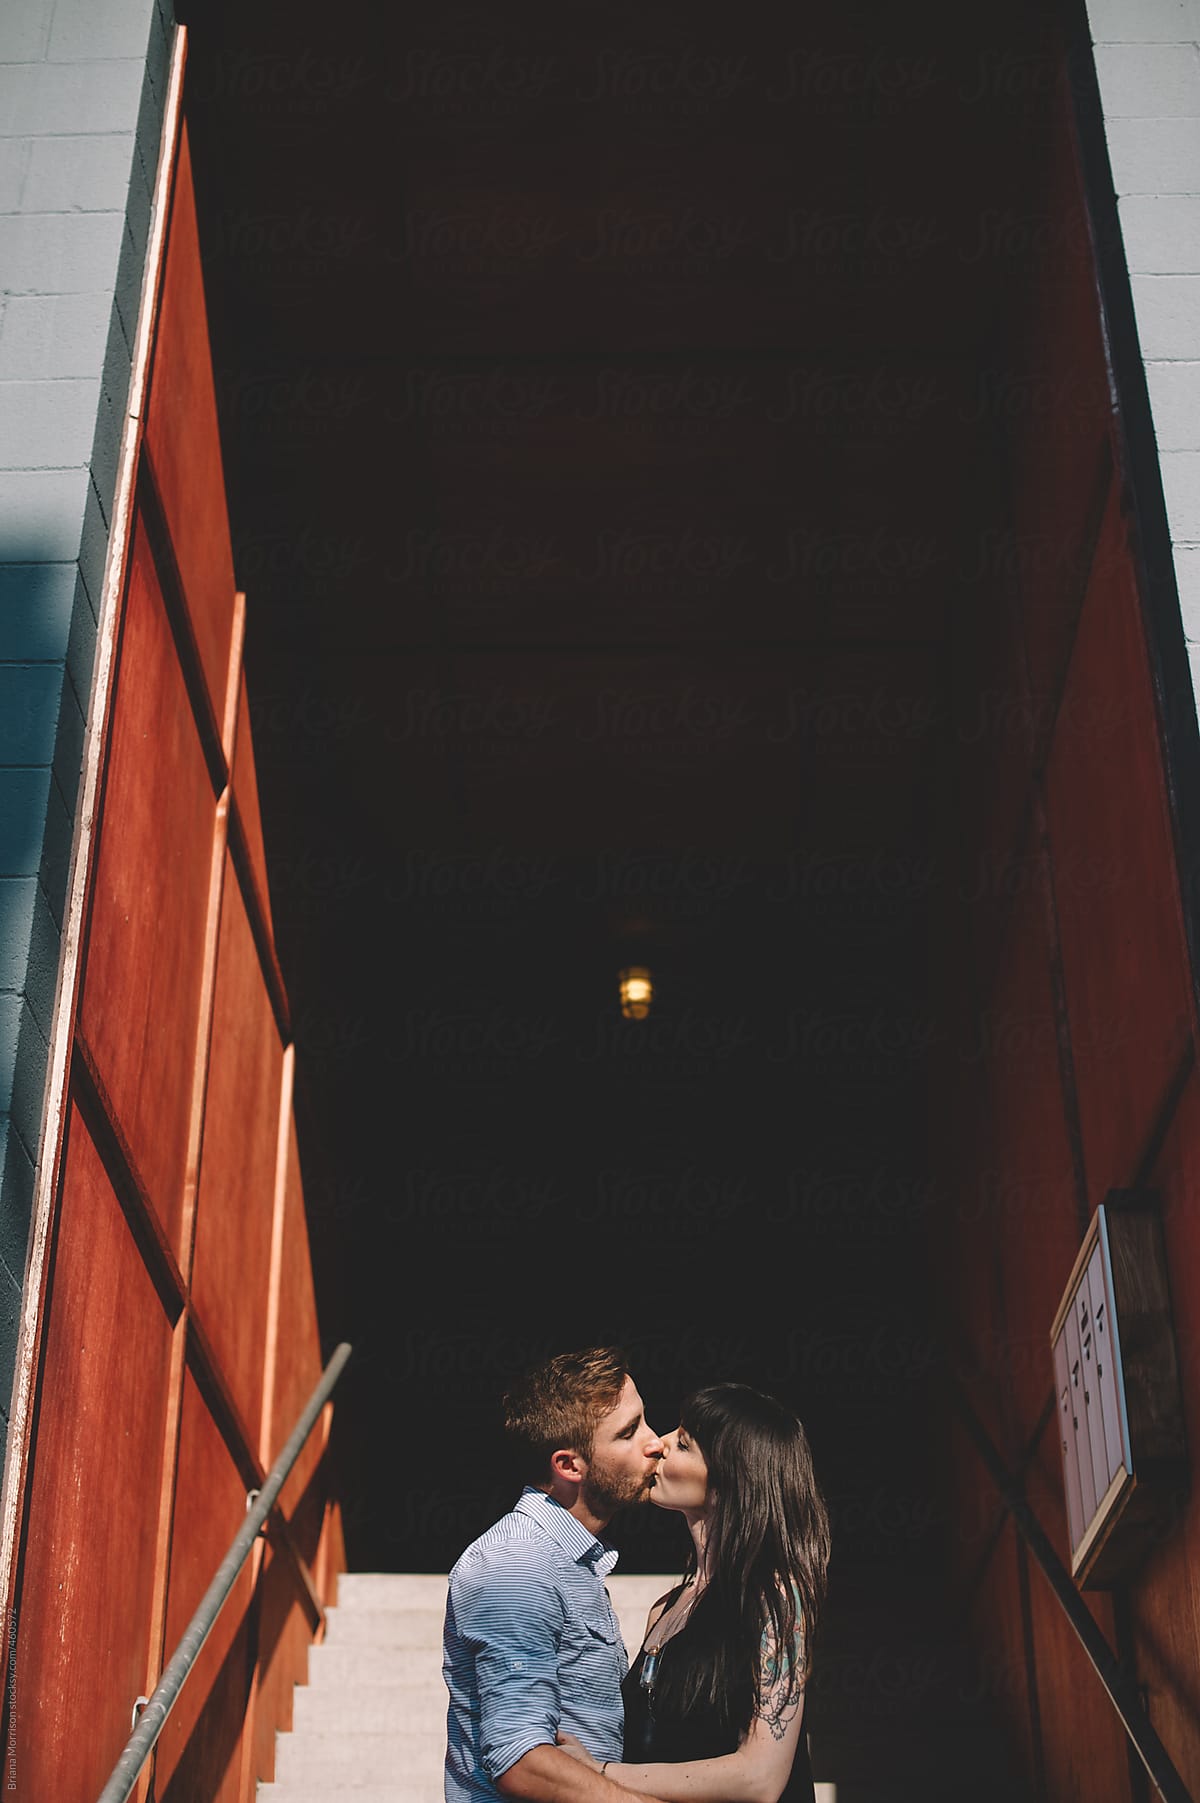 A Couple Kissing · Free Stock Photo